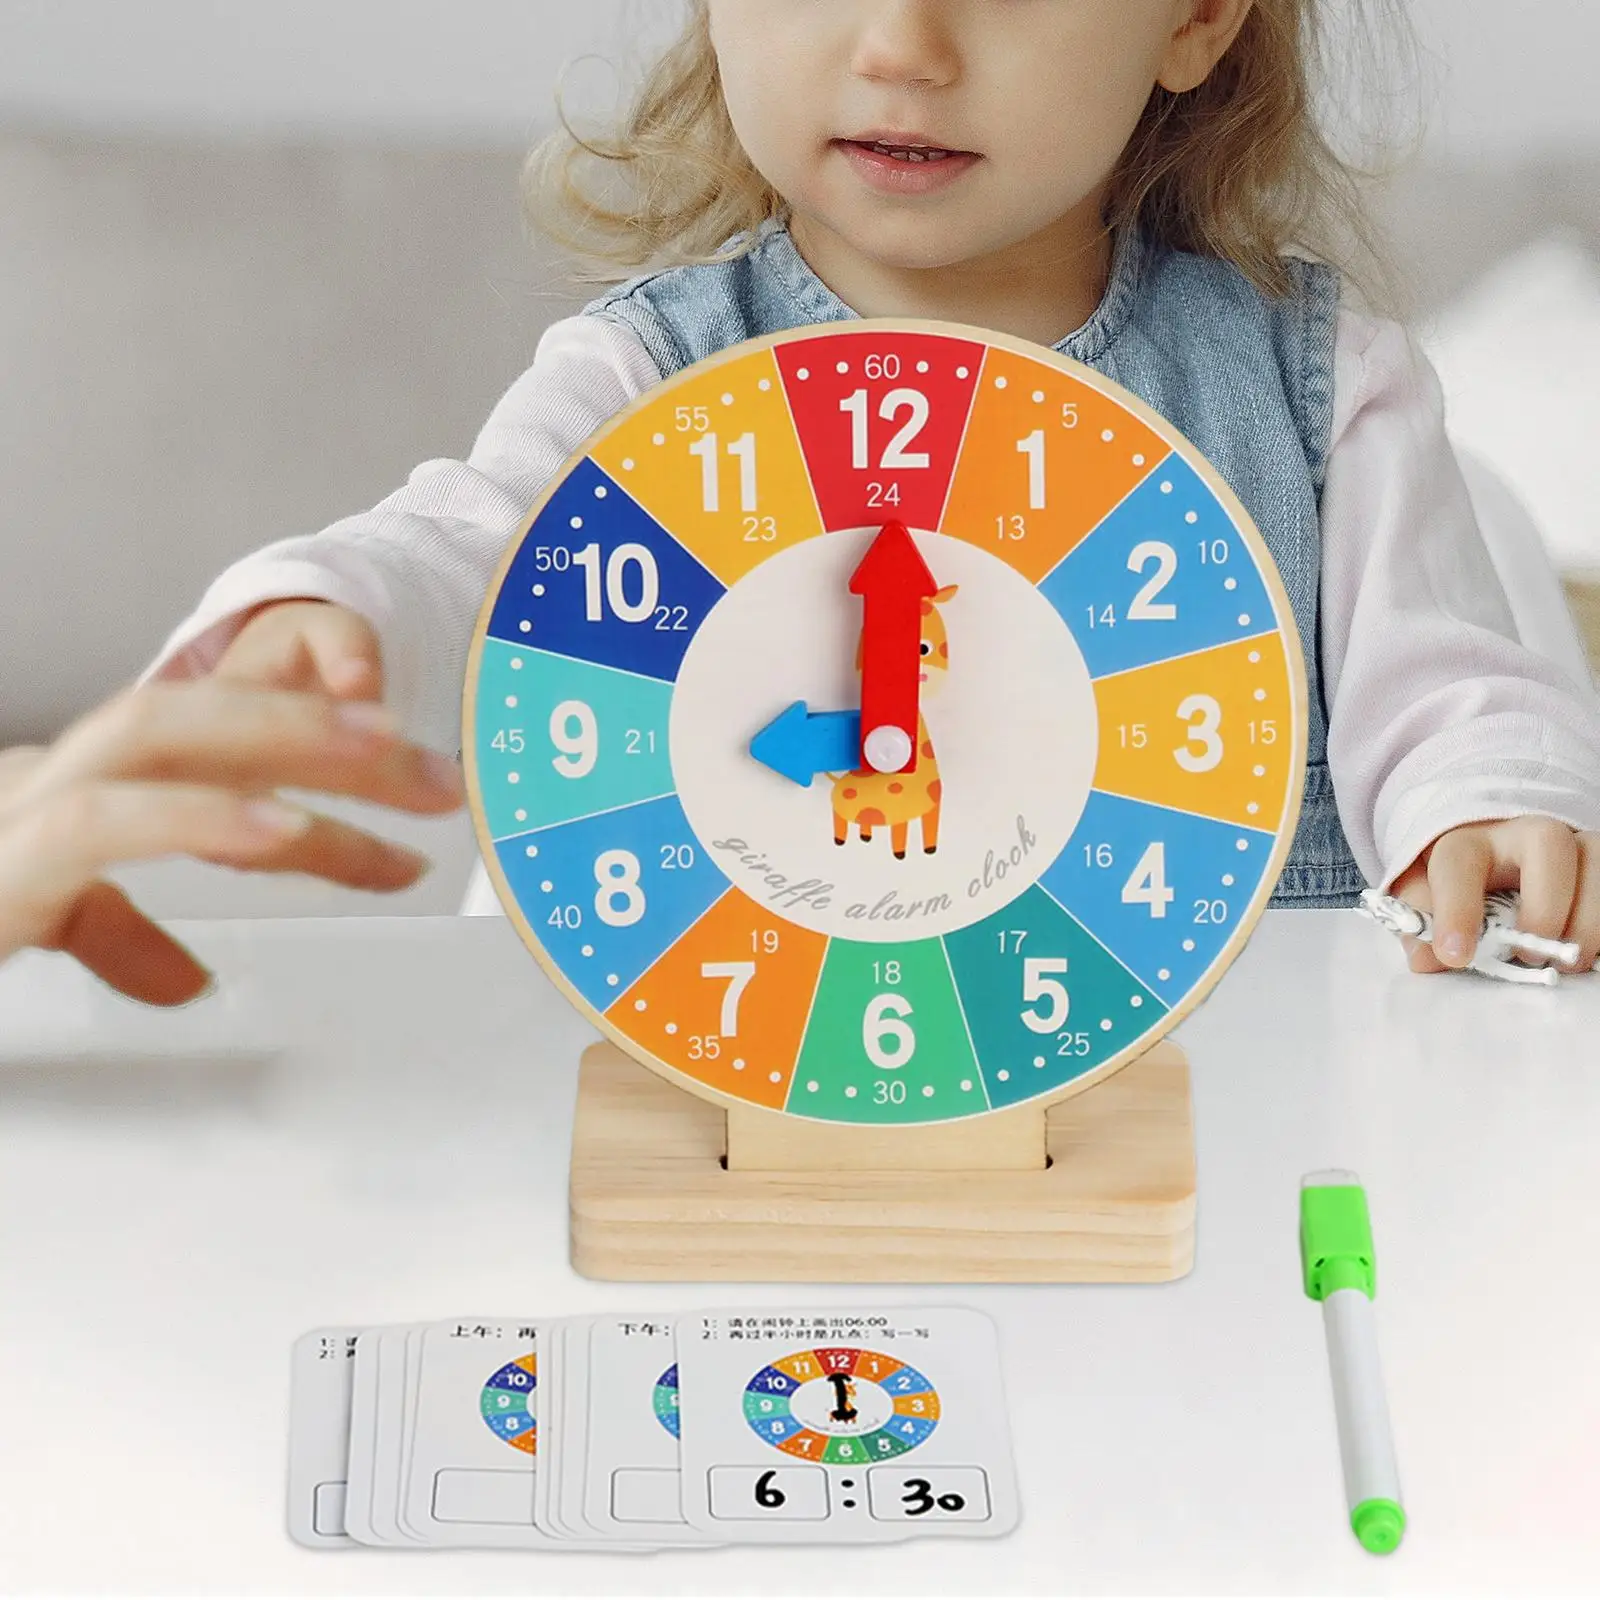 Sensory Toy Montessori Toy Life Skills Training Games Educational Gift Wooden